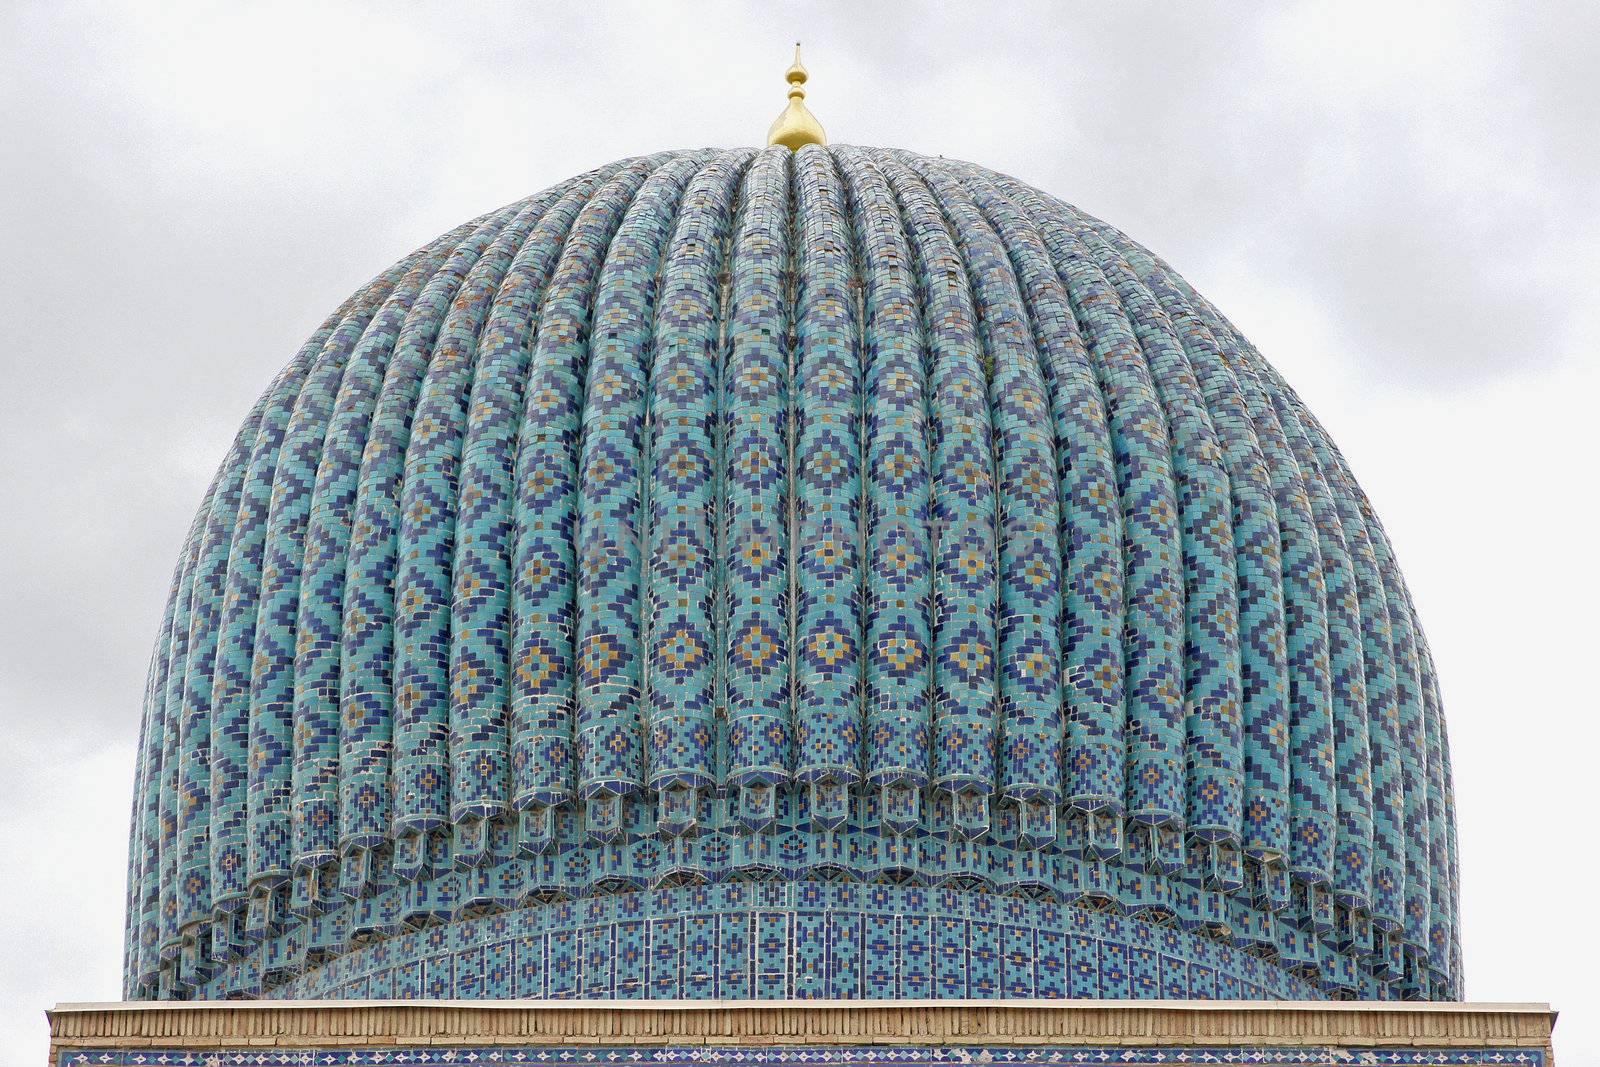 Gur-e Amir, Tomb, Samarkand, Uzbekistan by alfotokunst